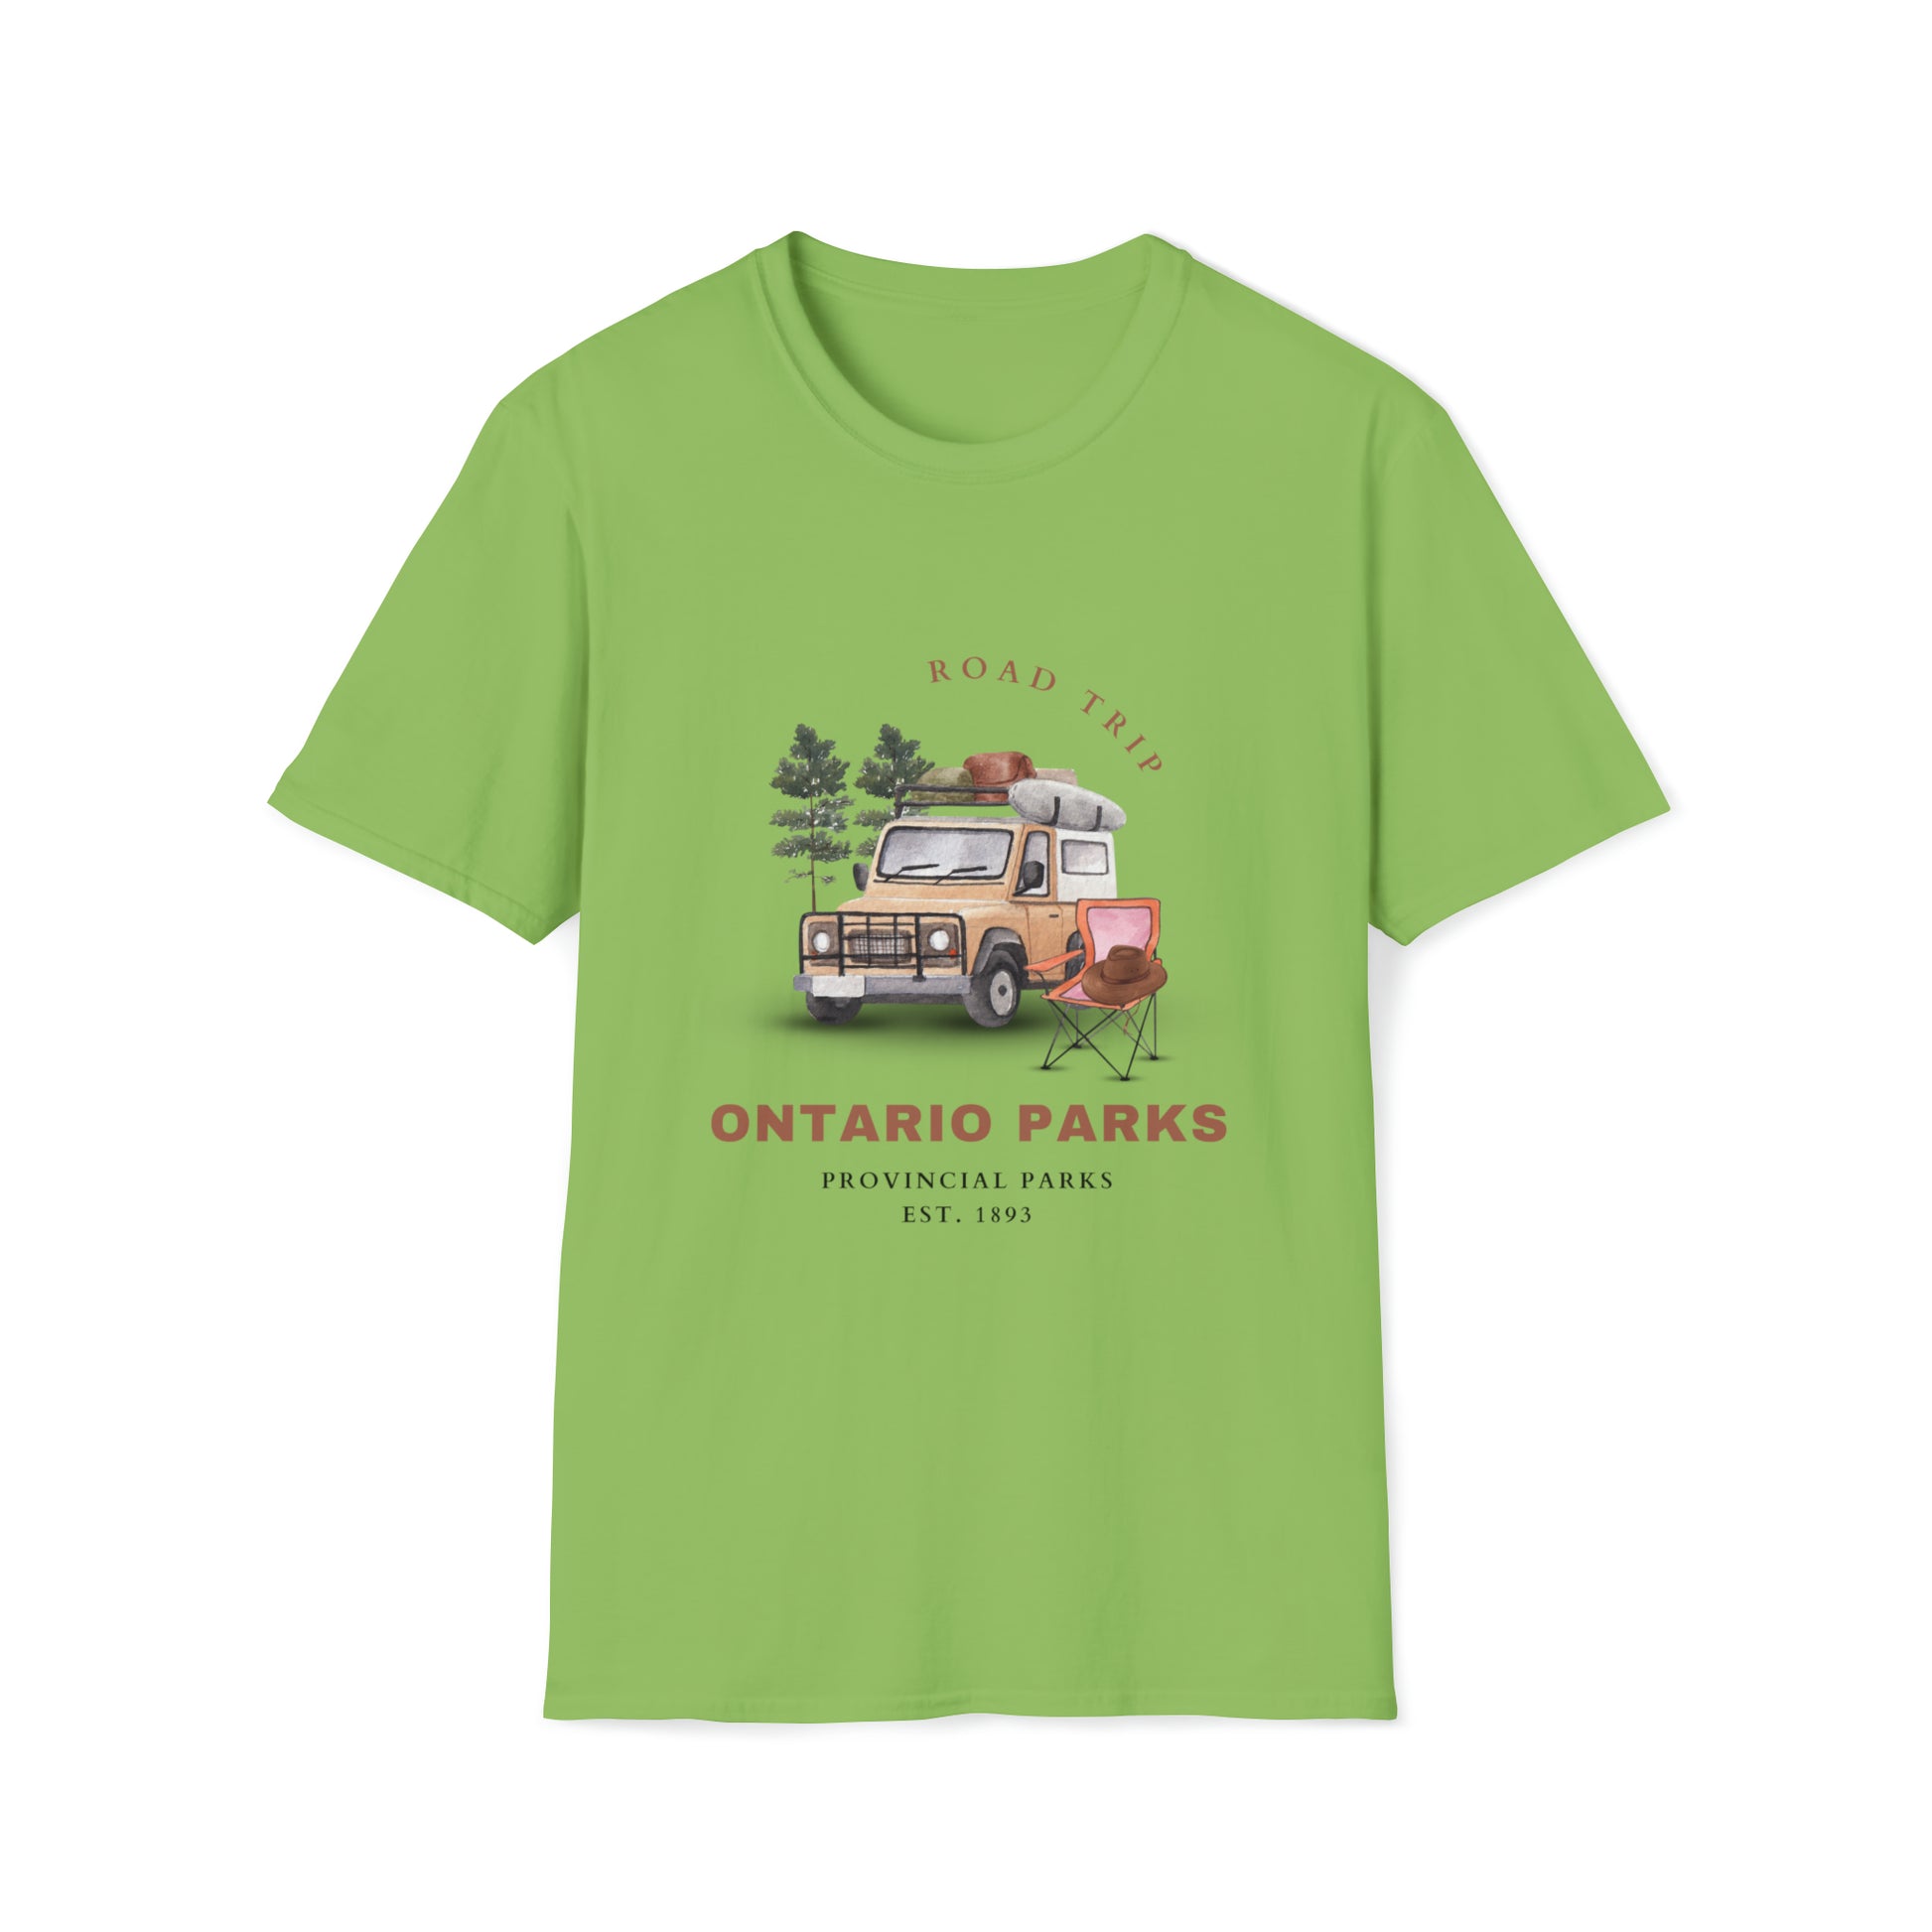 Road Trip - Ontario Parks Camping - Urban Camper